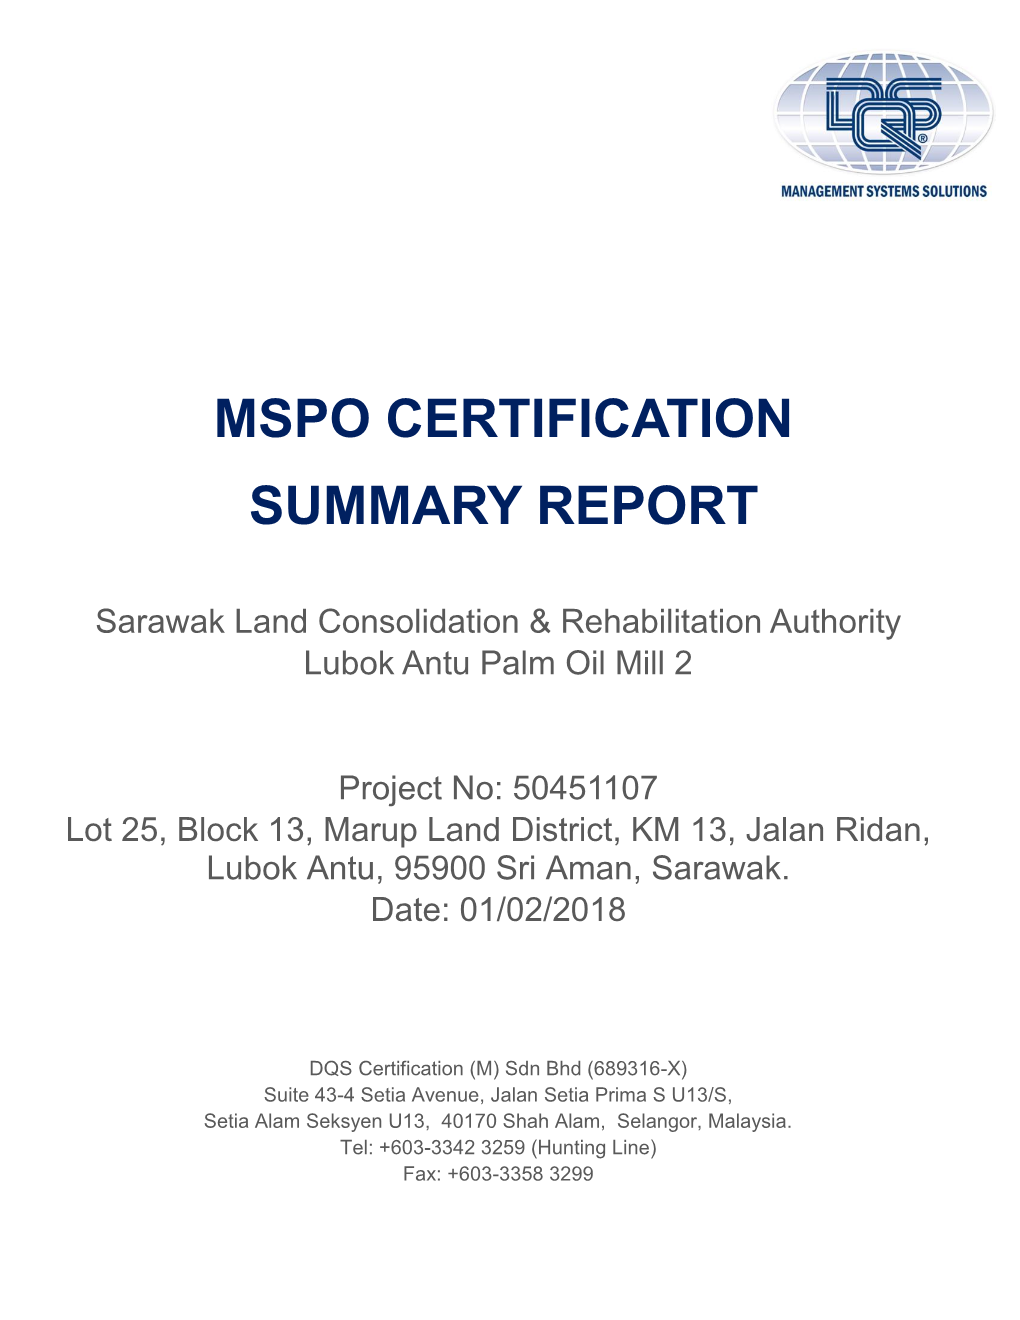 Mspo Certification Summary Report